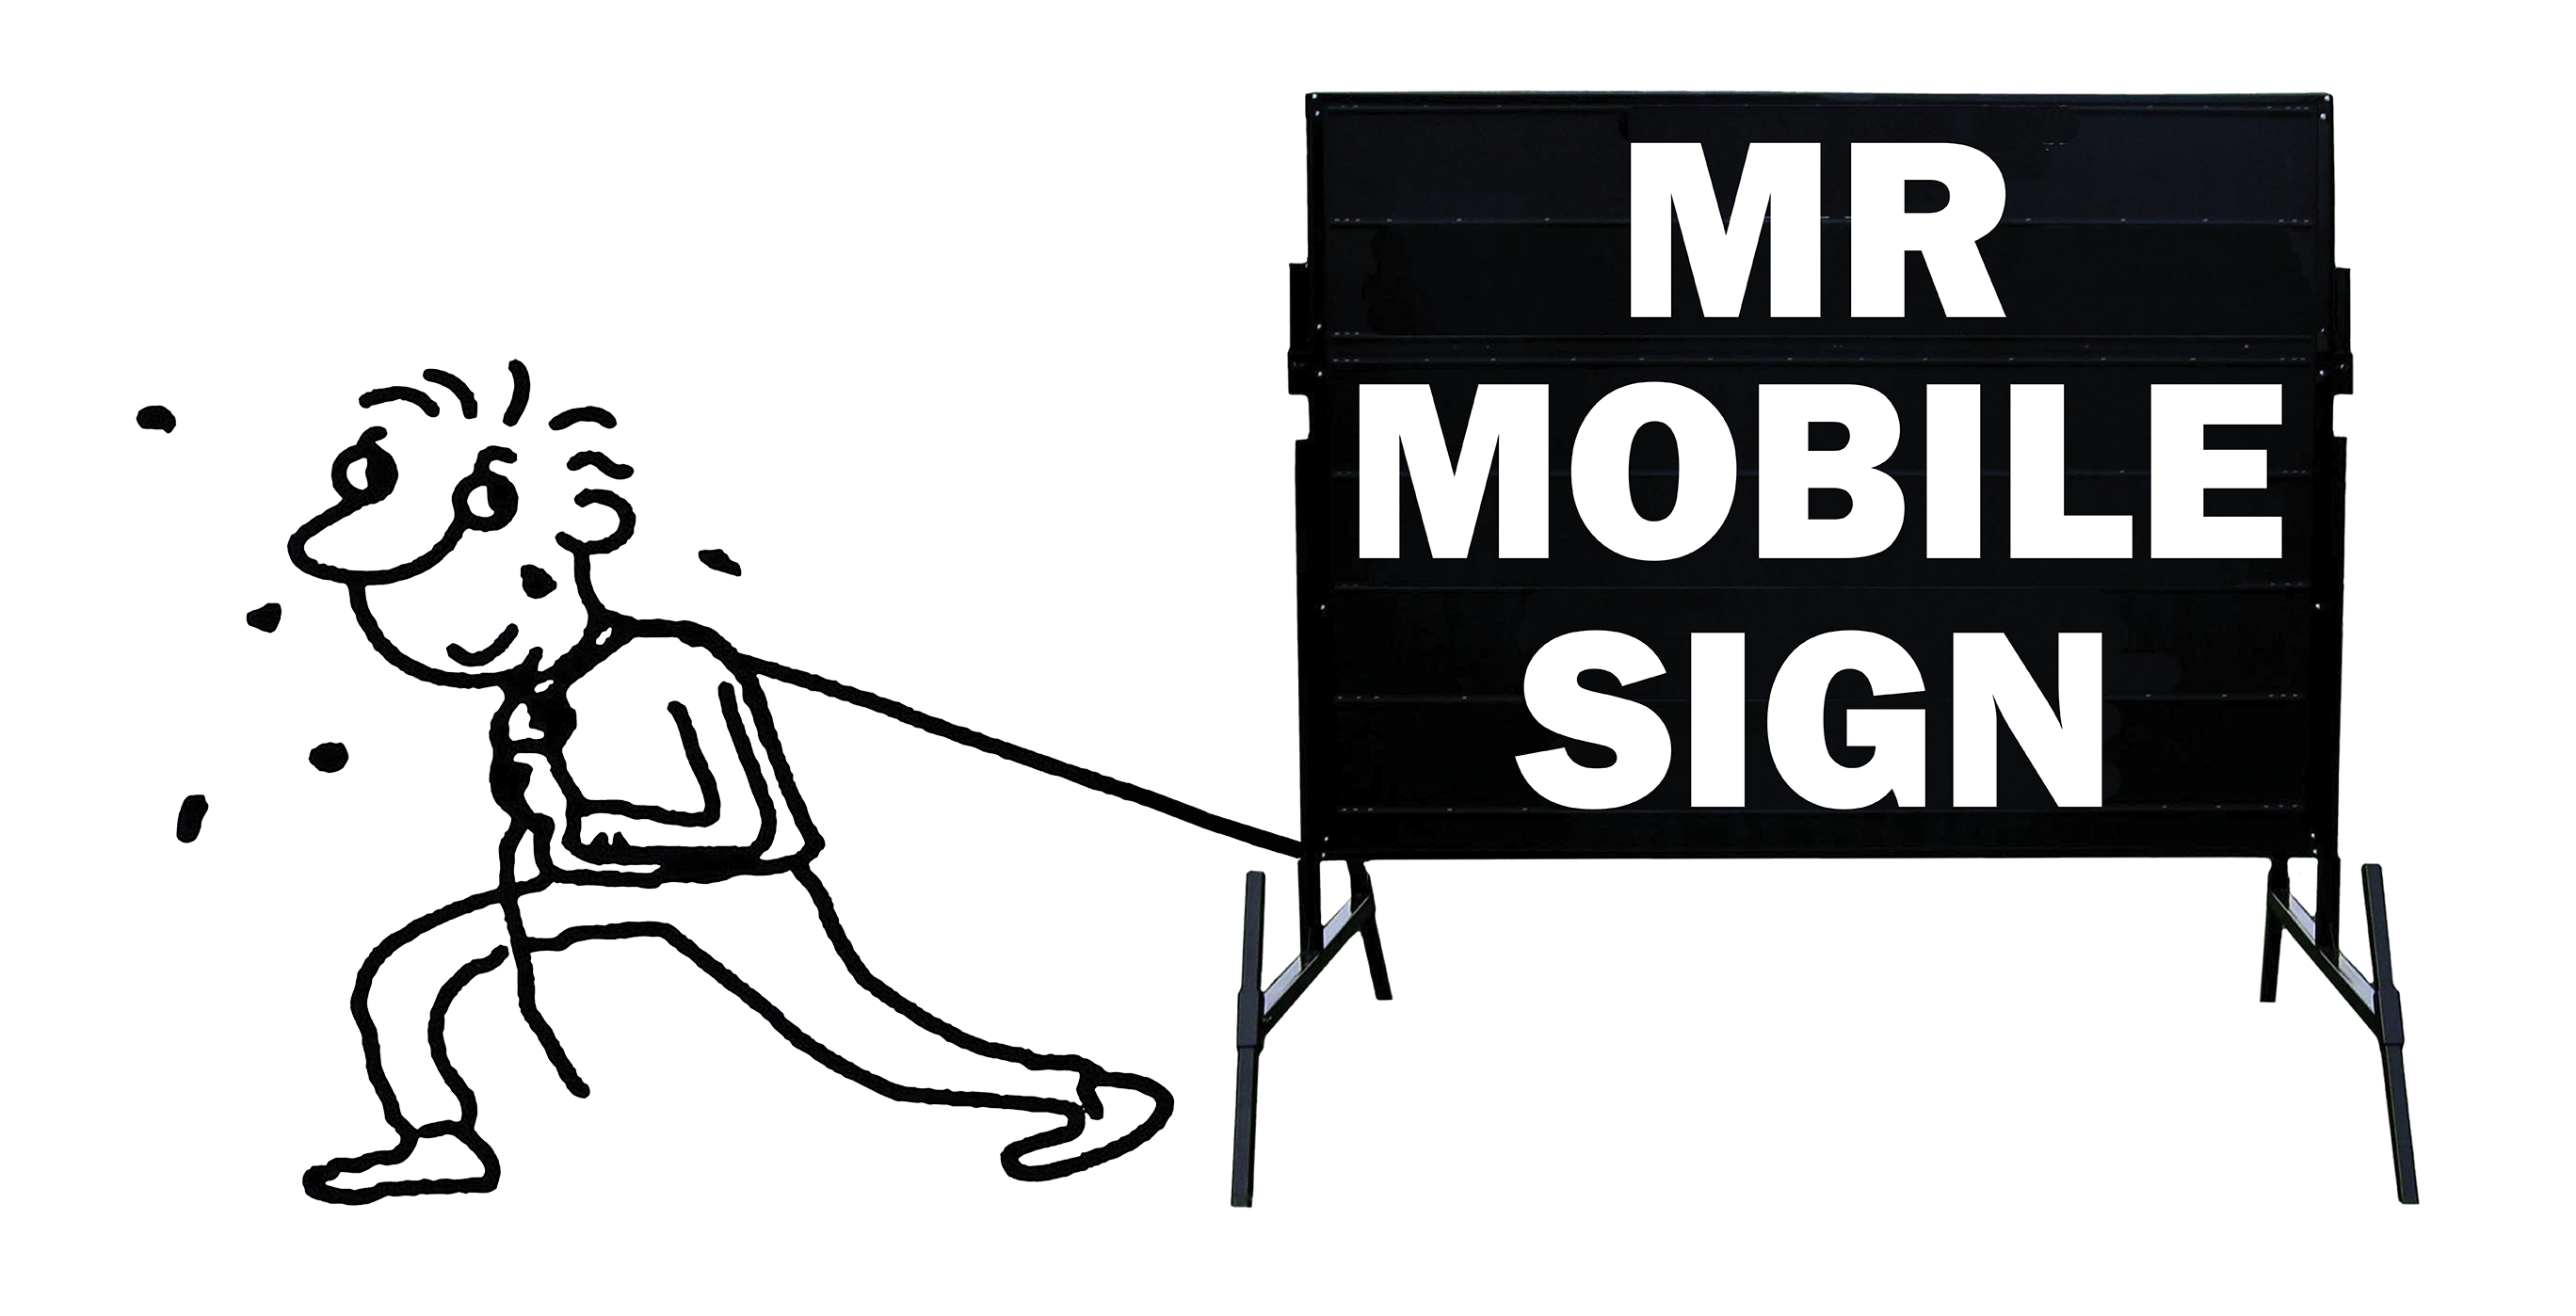 Mr. Mobile Sign